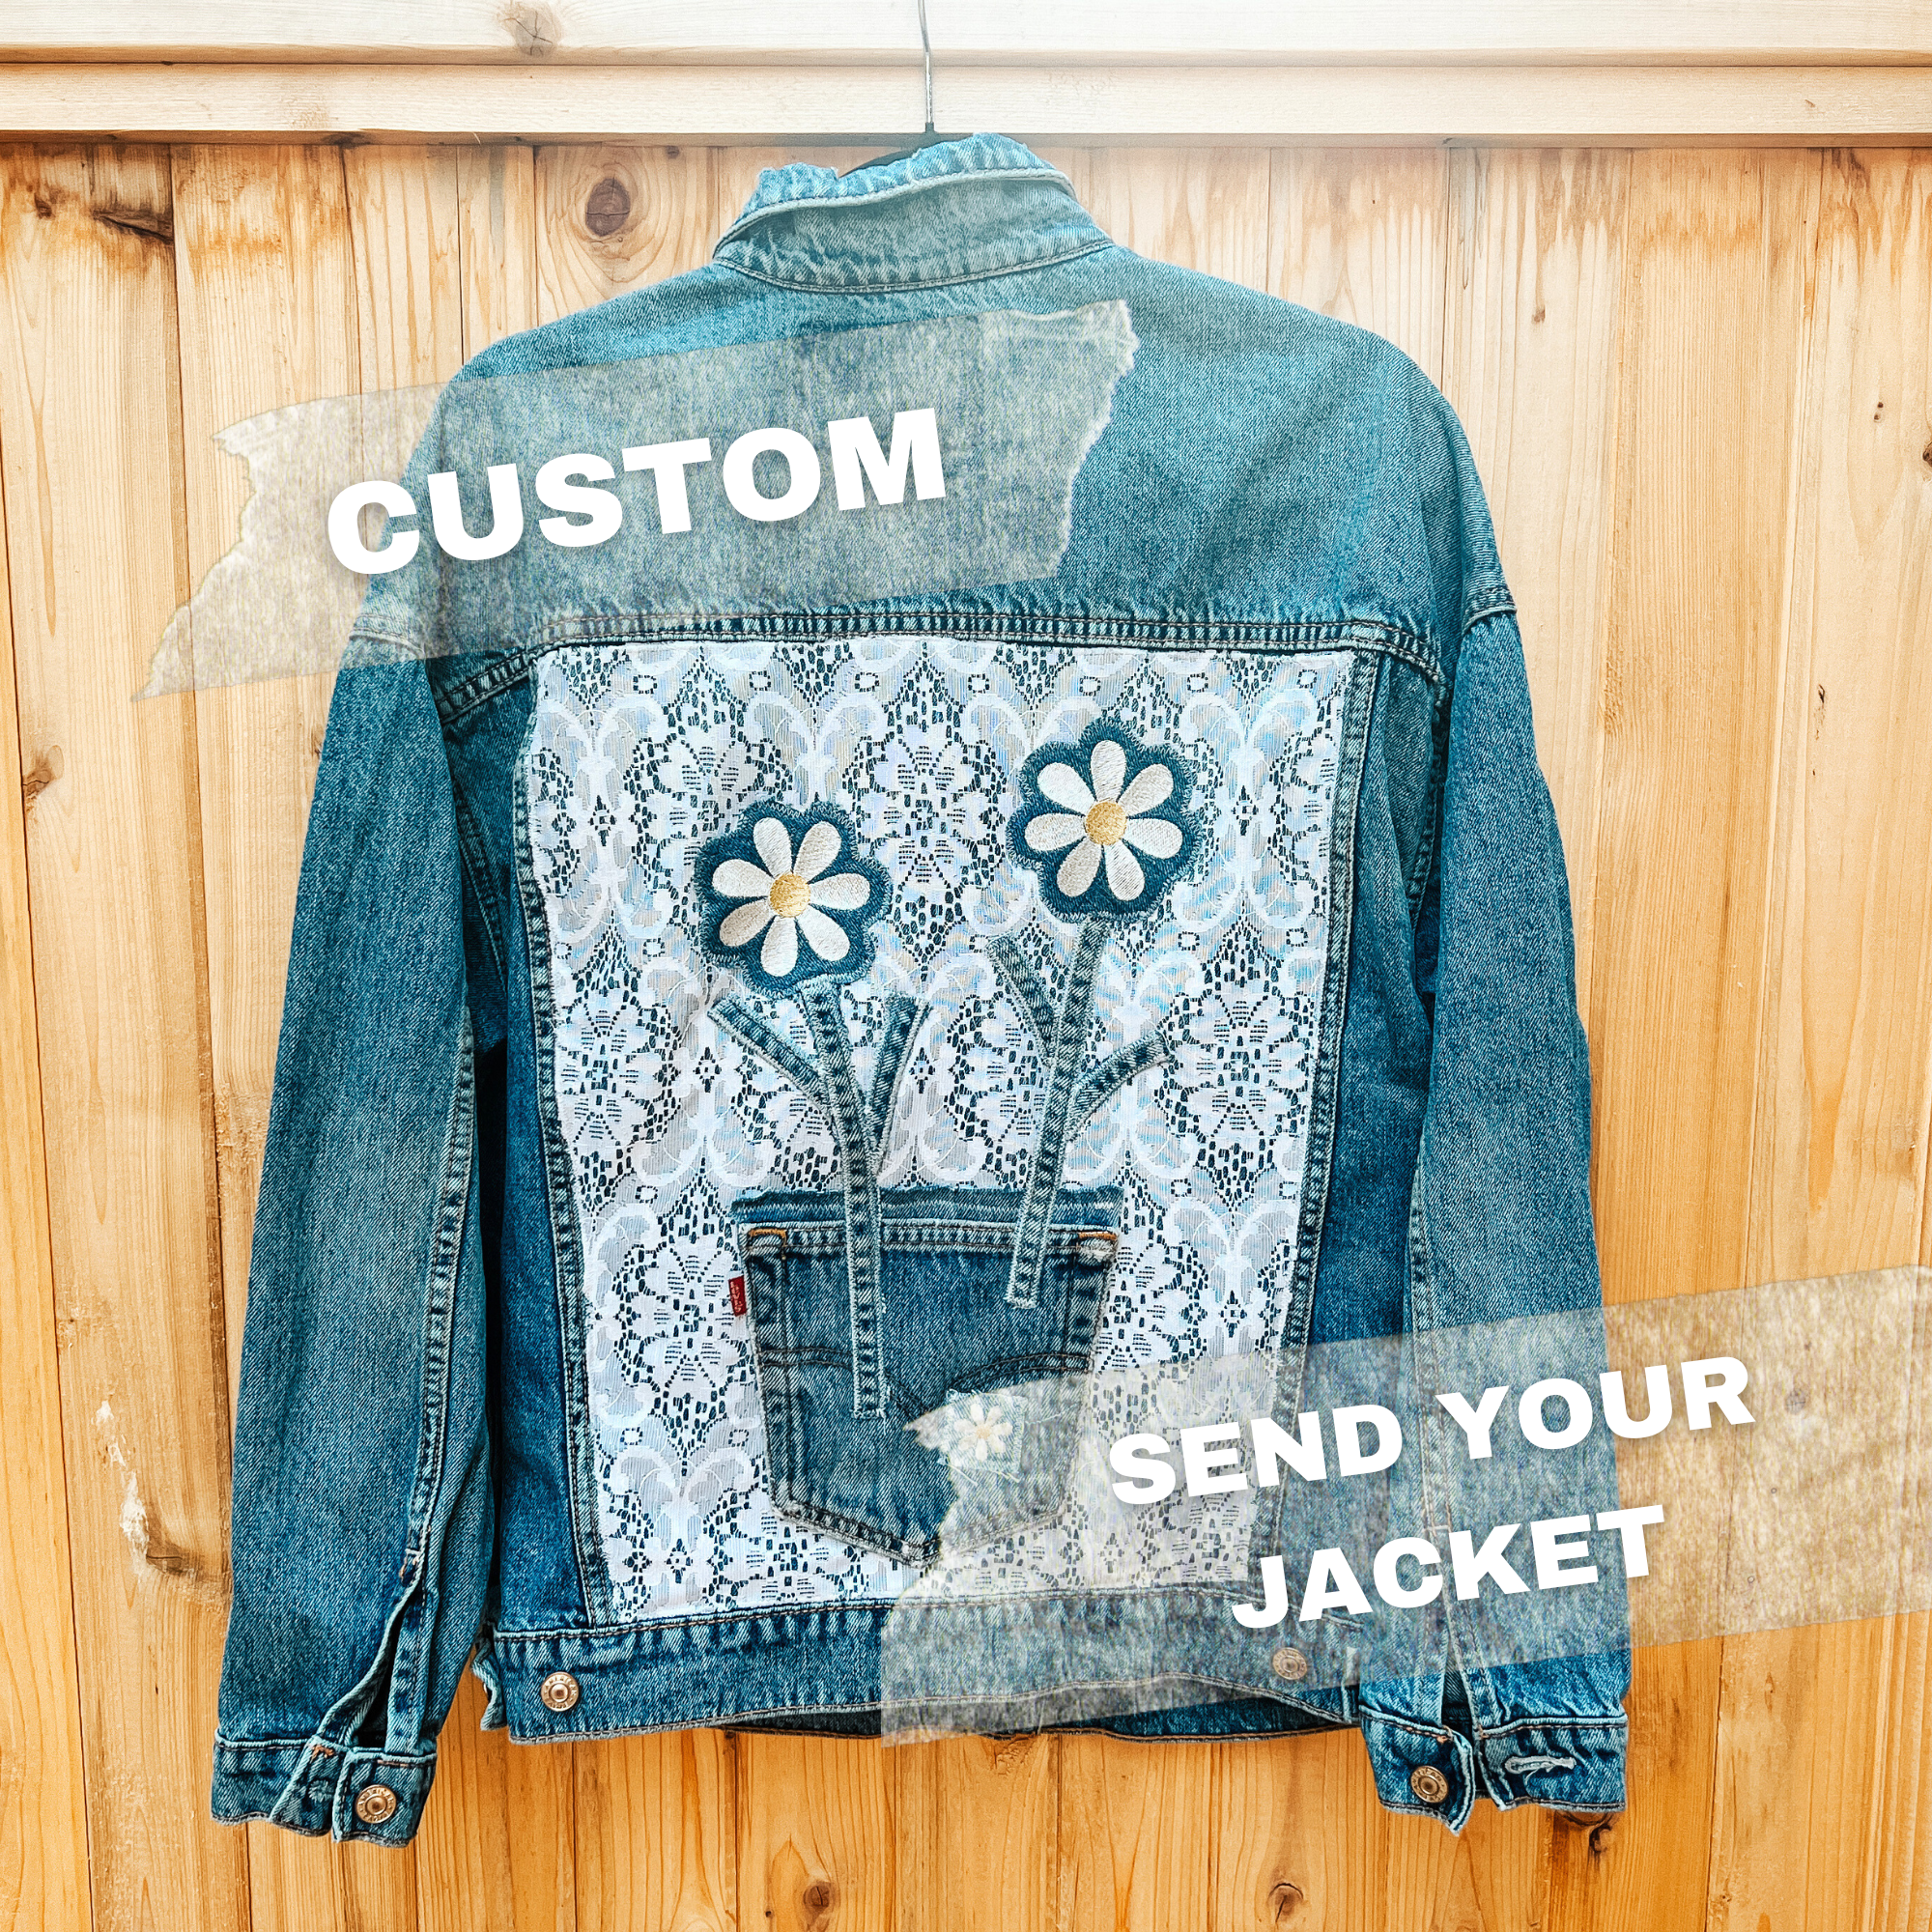 Custom Denim Jacket - Send us your jacket